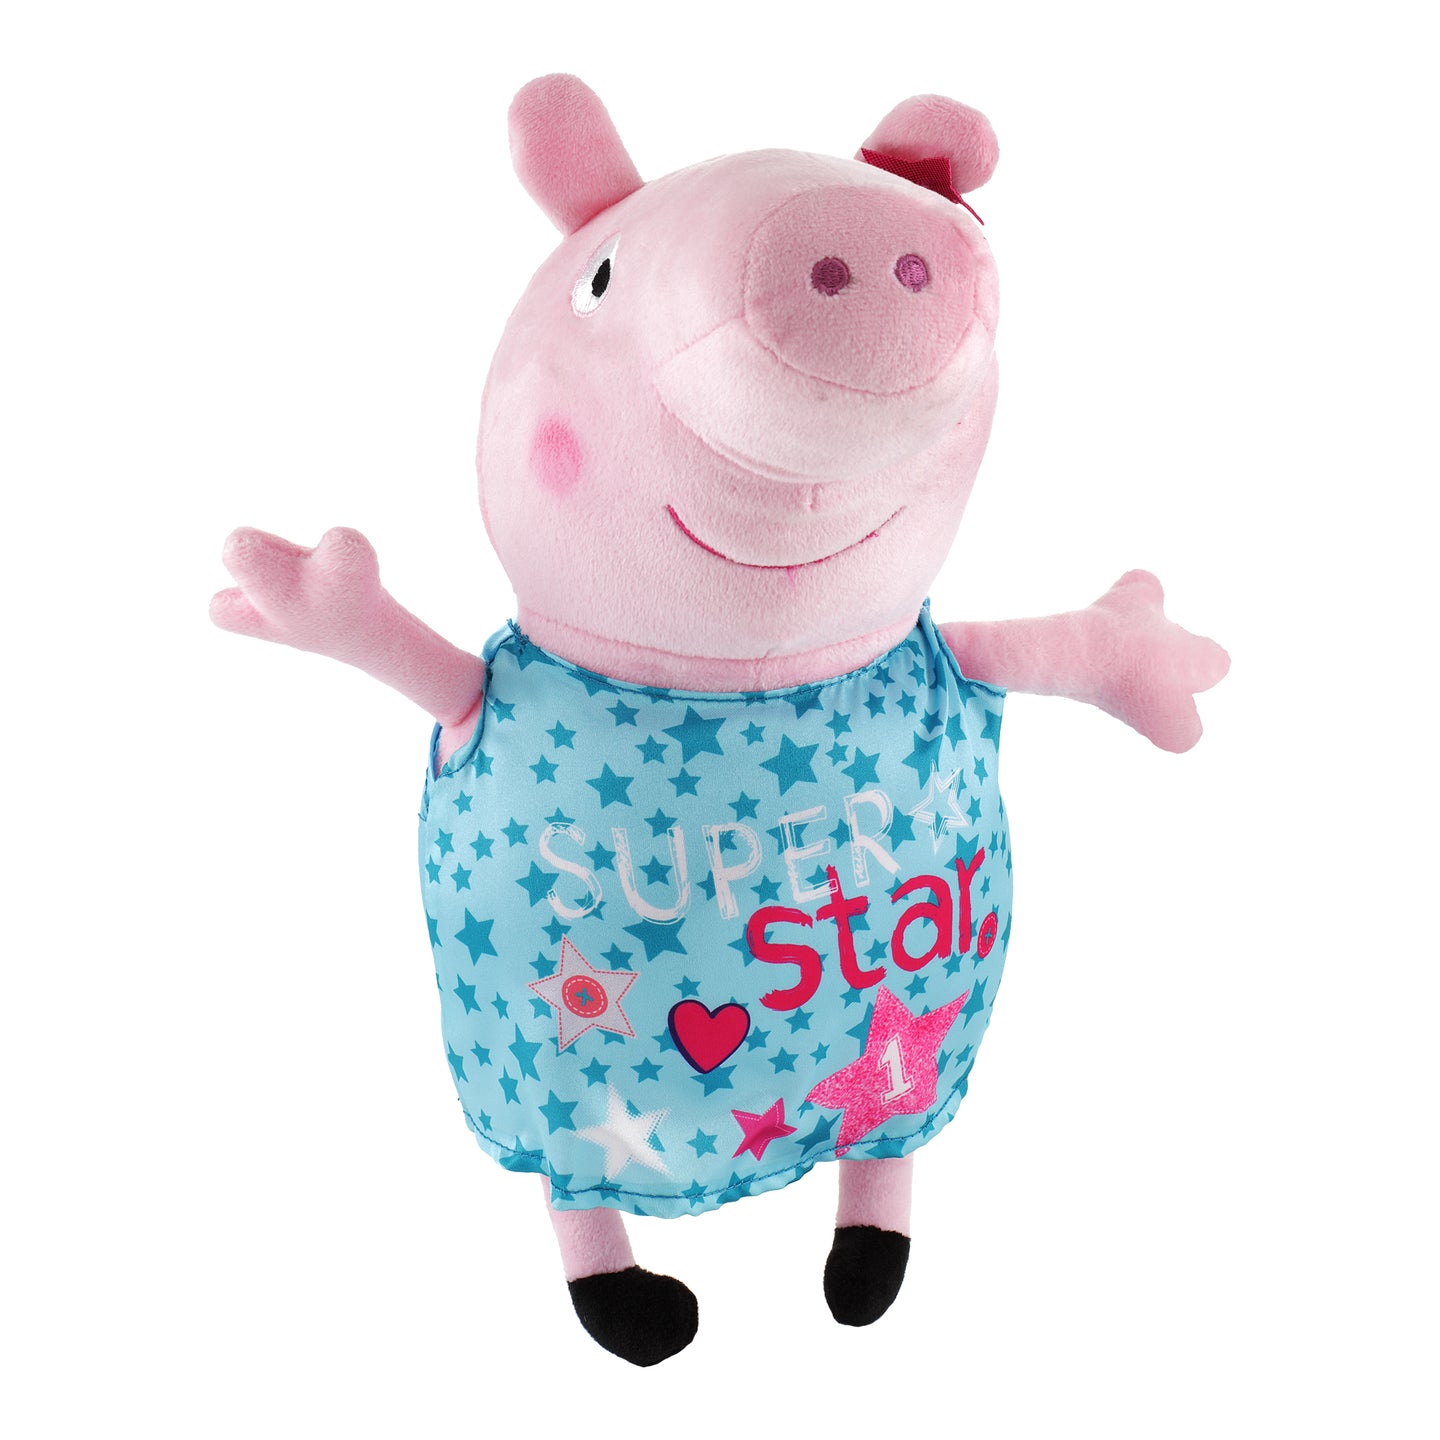 Peppa Pig Soft Plush Cuddly Toy 12